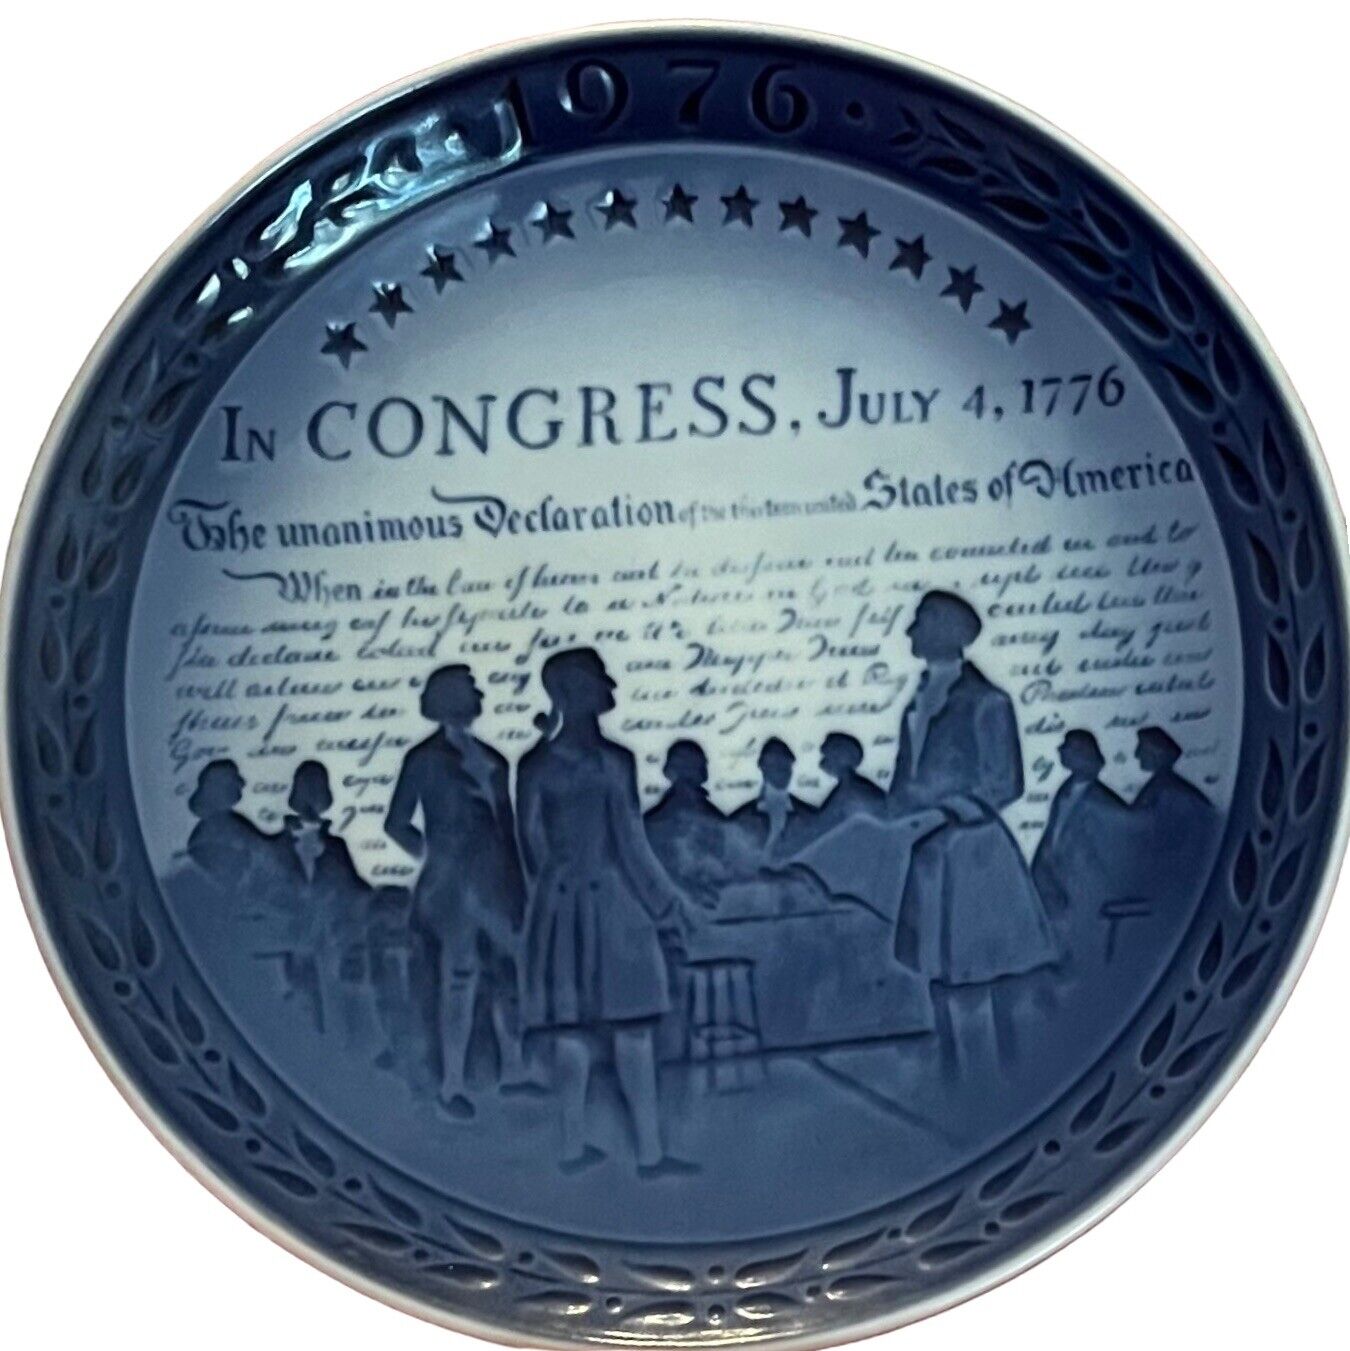 ROYAL COPENHAGEN VTG Plate 1976 Bicentennial Declaration INDEPENDENCE Blue White